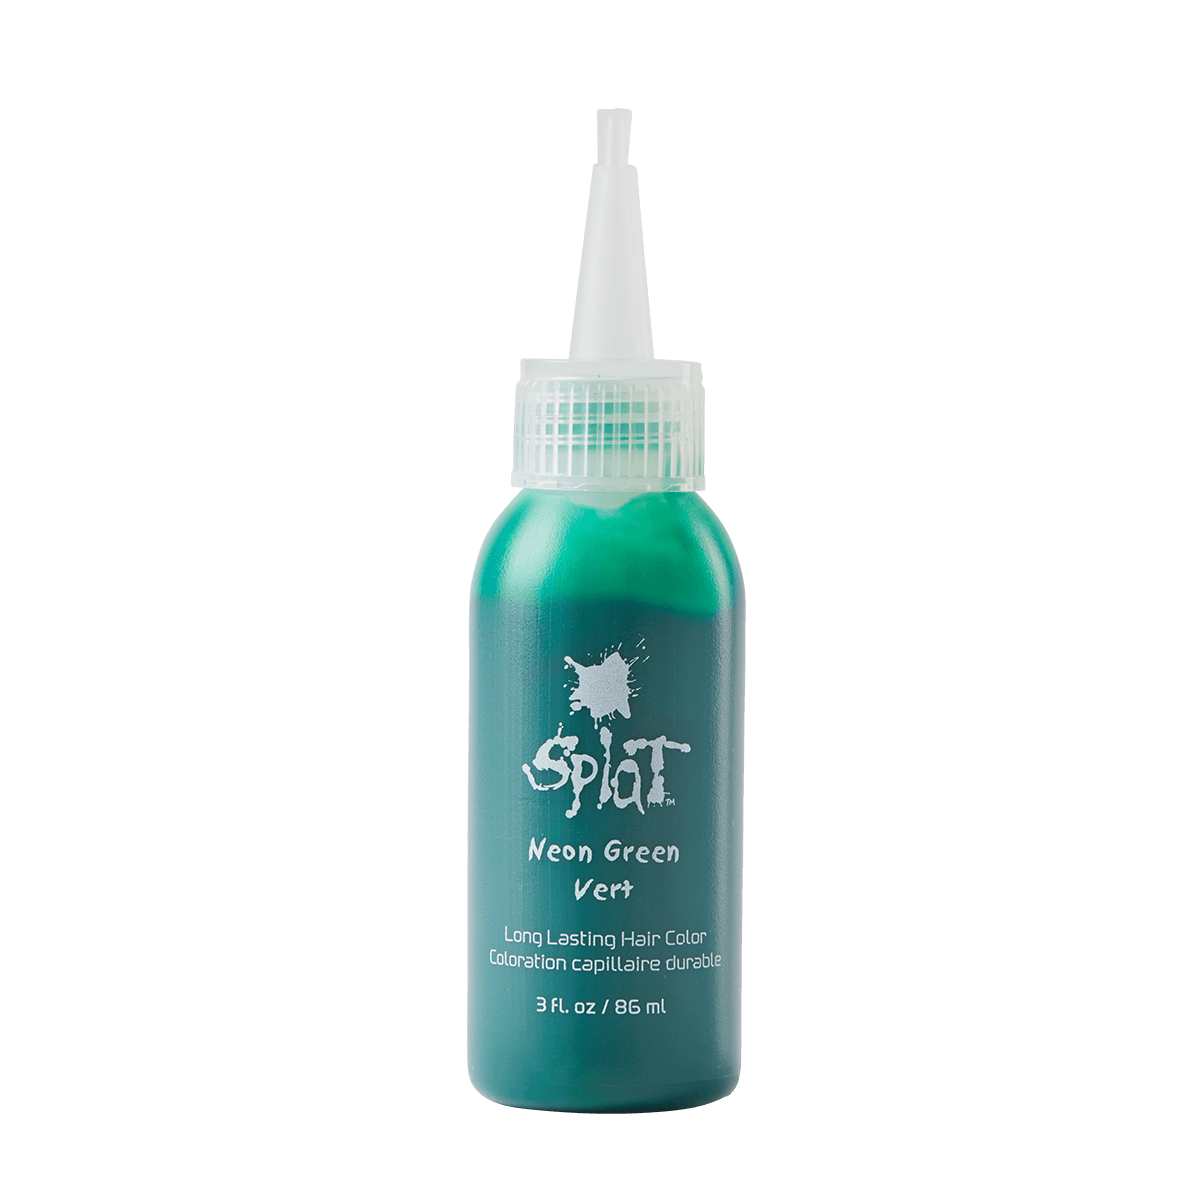 Splat Neon Green Original Complete Kit with Bleach. Green semi-permanent hair dye